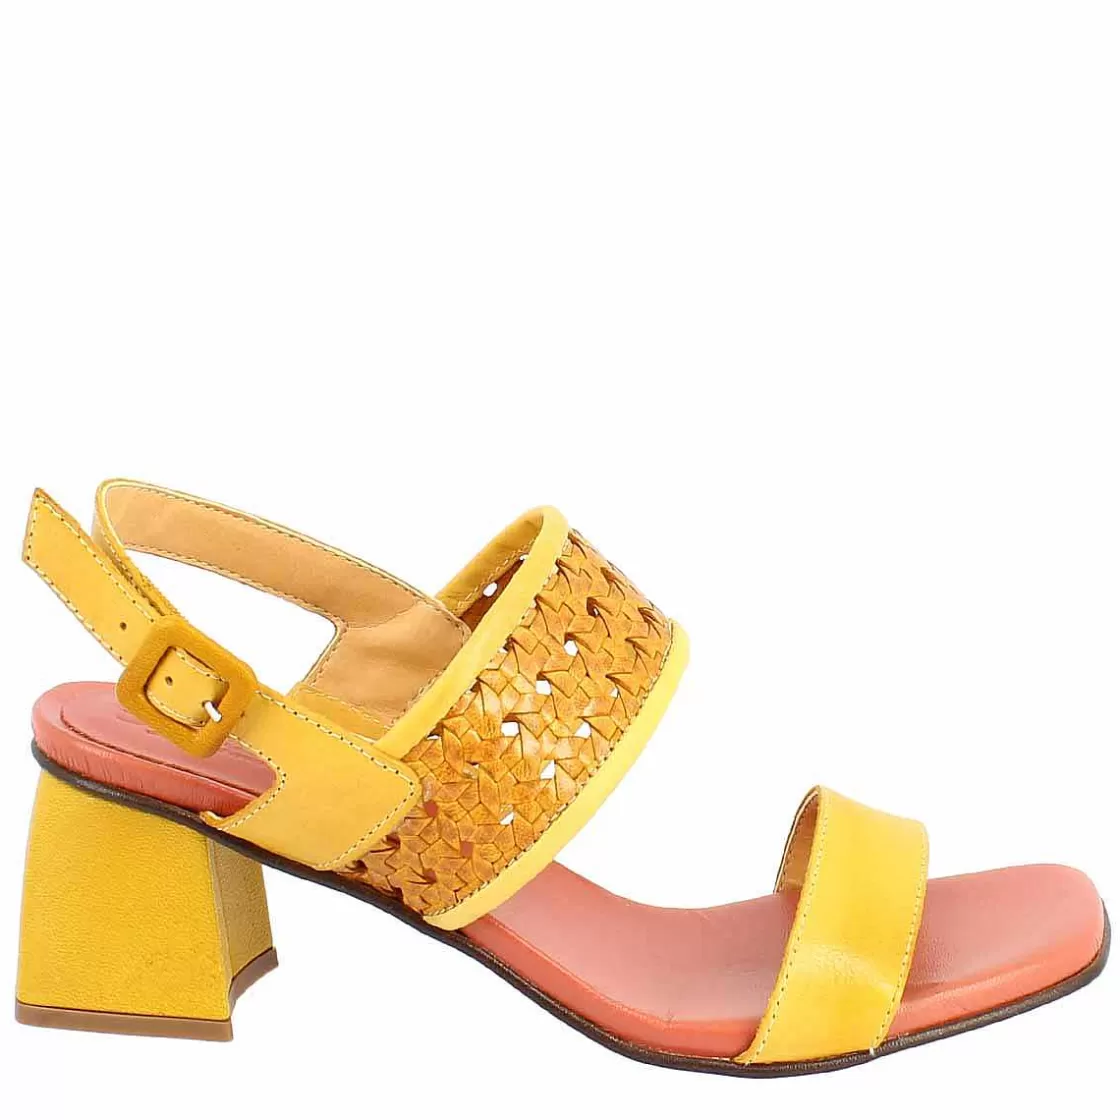 Leonardo Handmade Women'S Slingback Sandals In Yellow Leather. Best